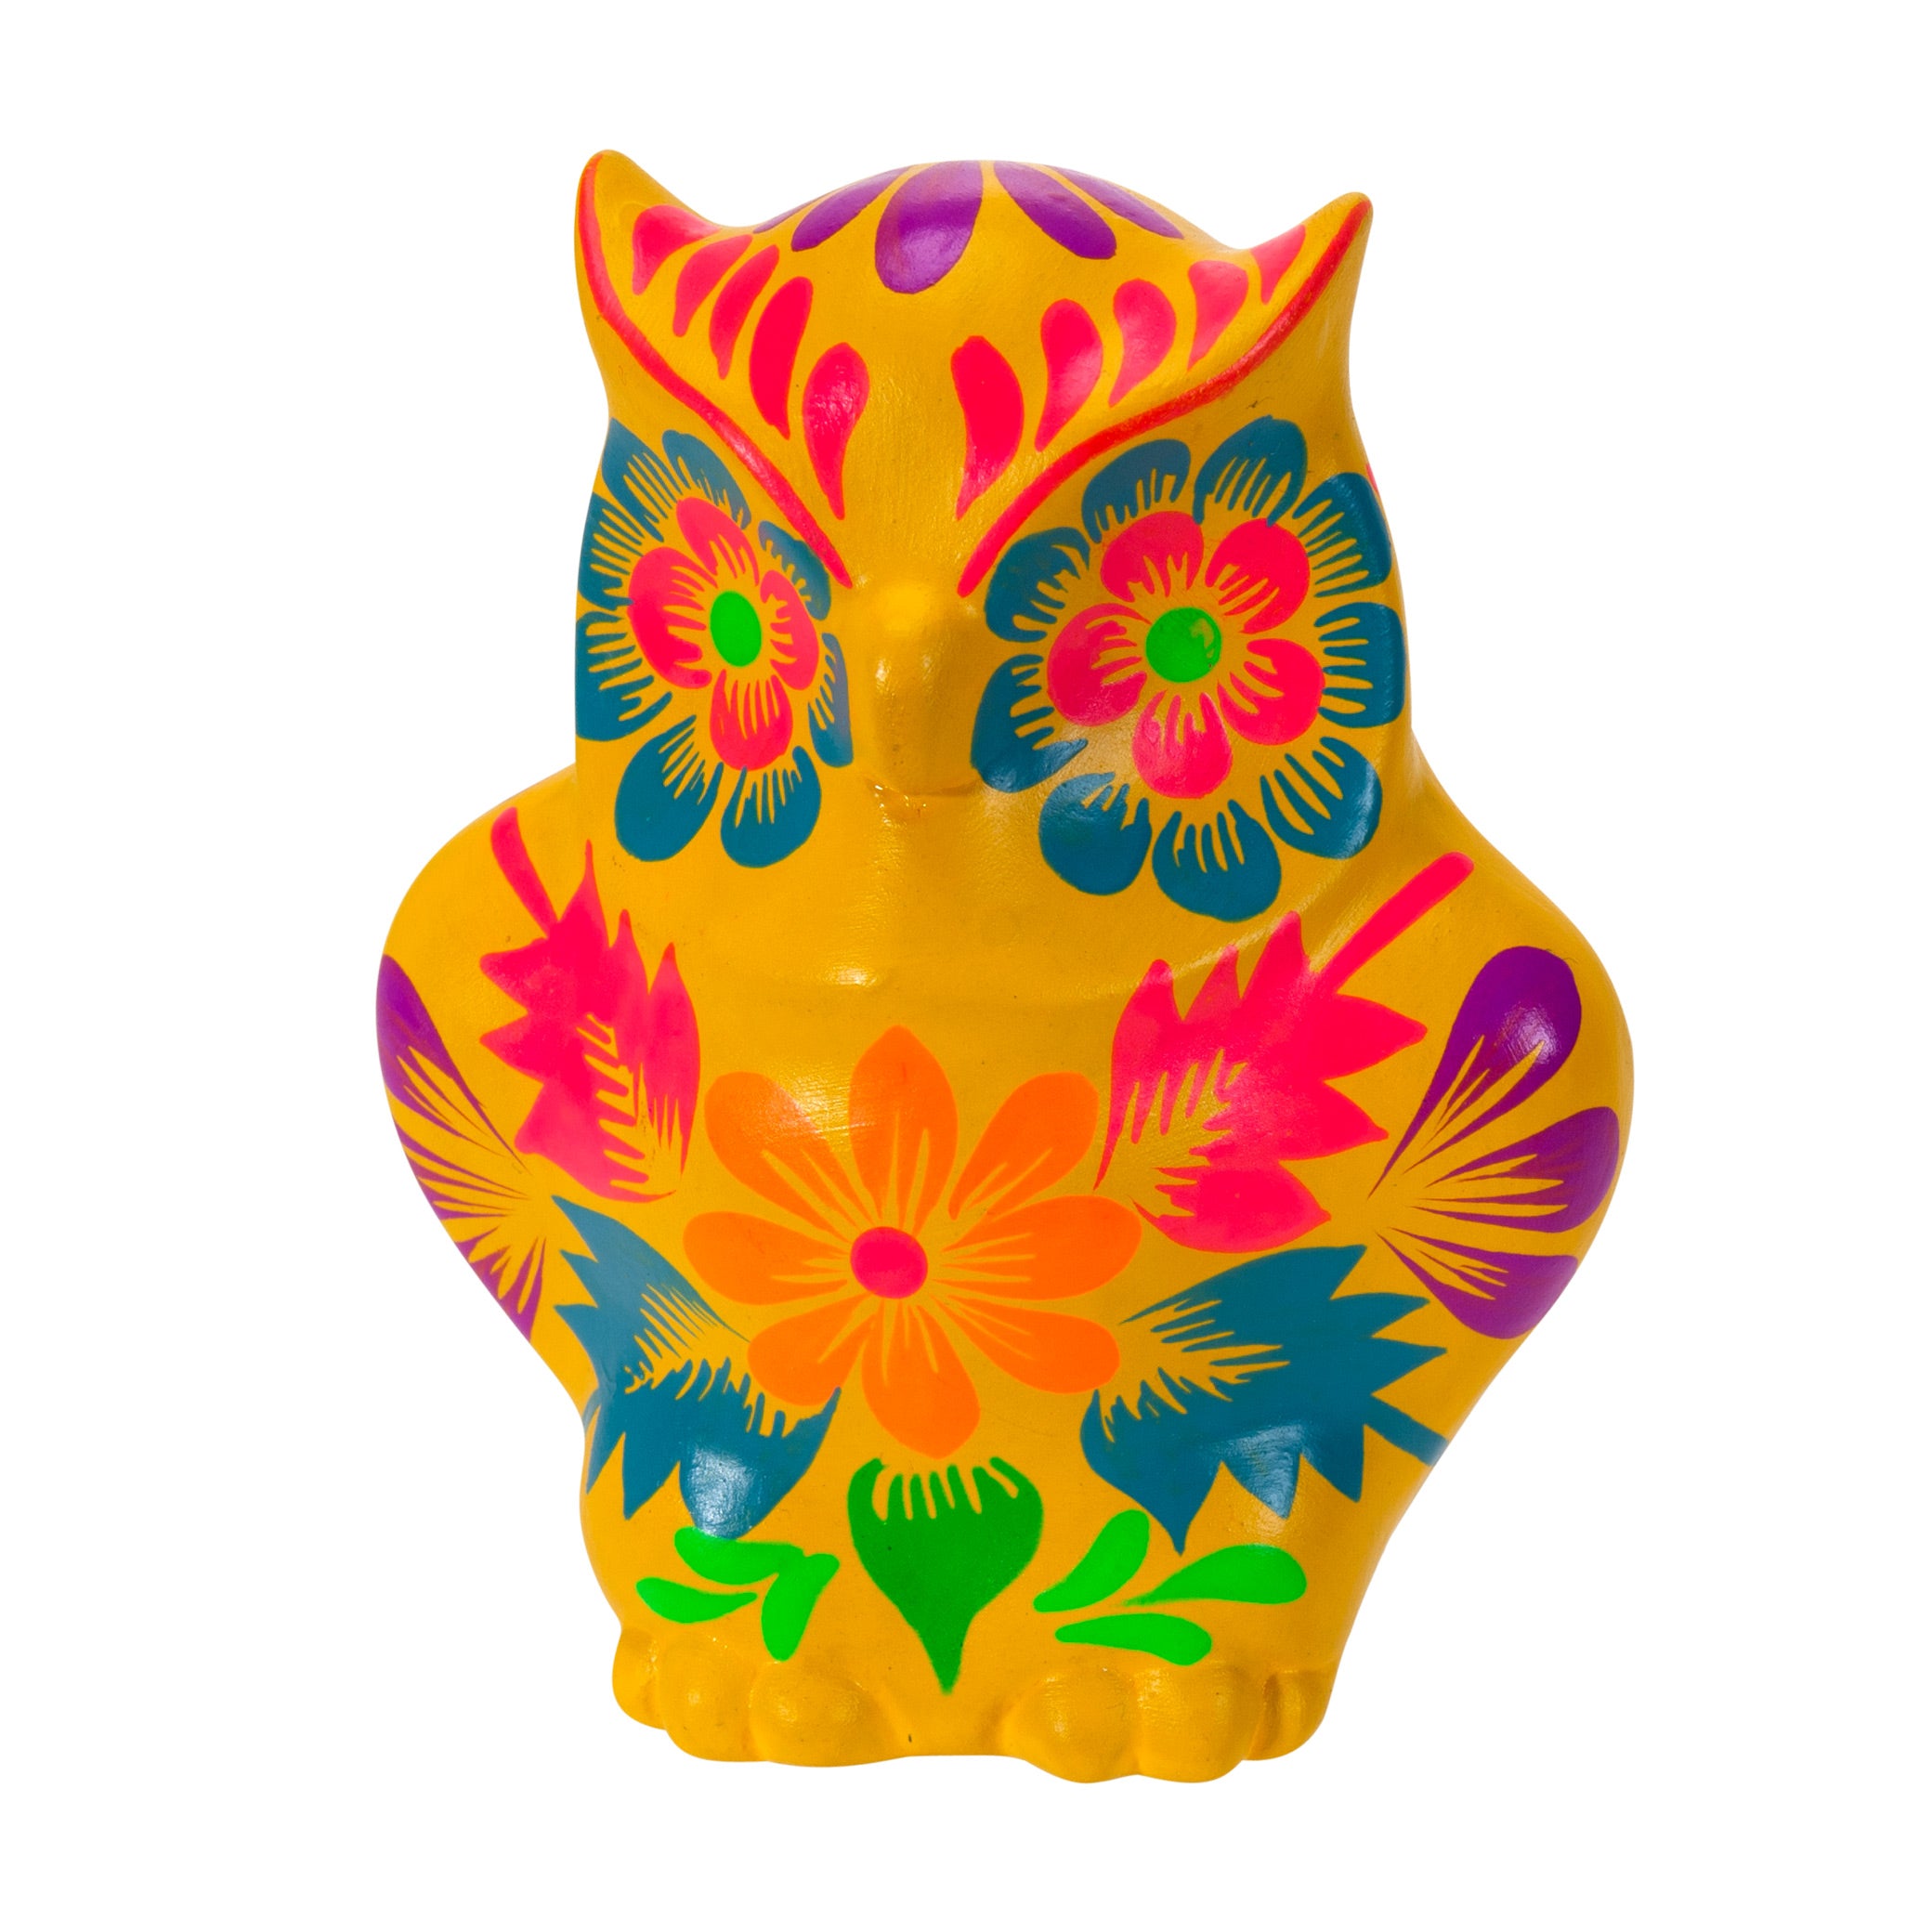 Fiesta Owl Yellow - Small Ceramic Figurine